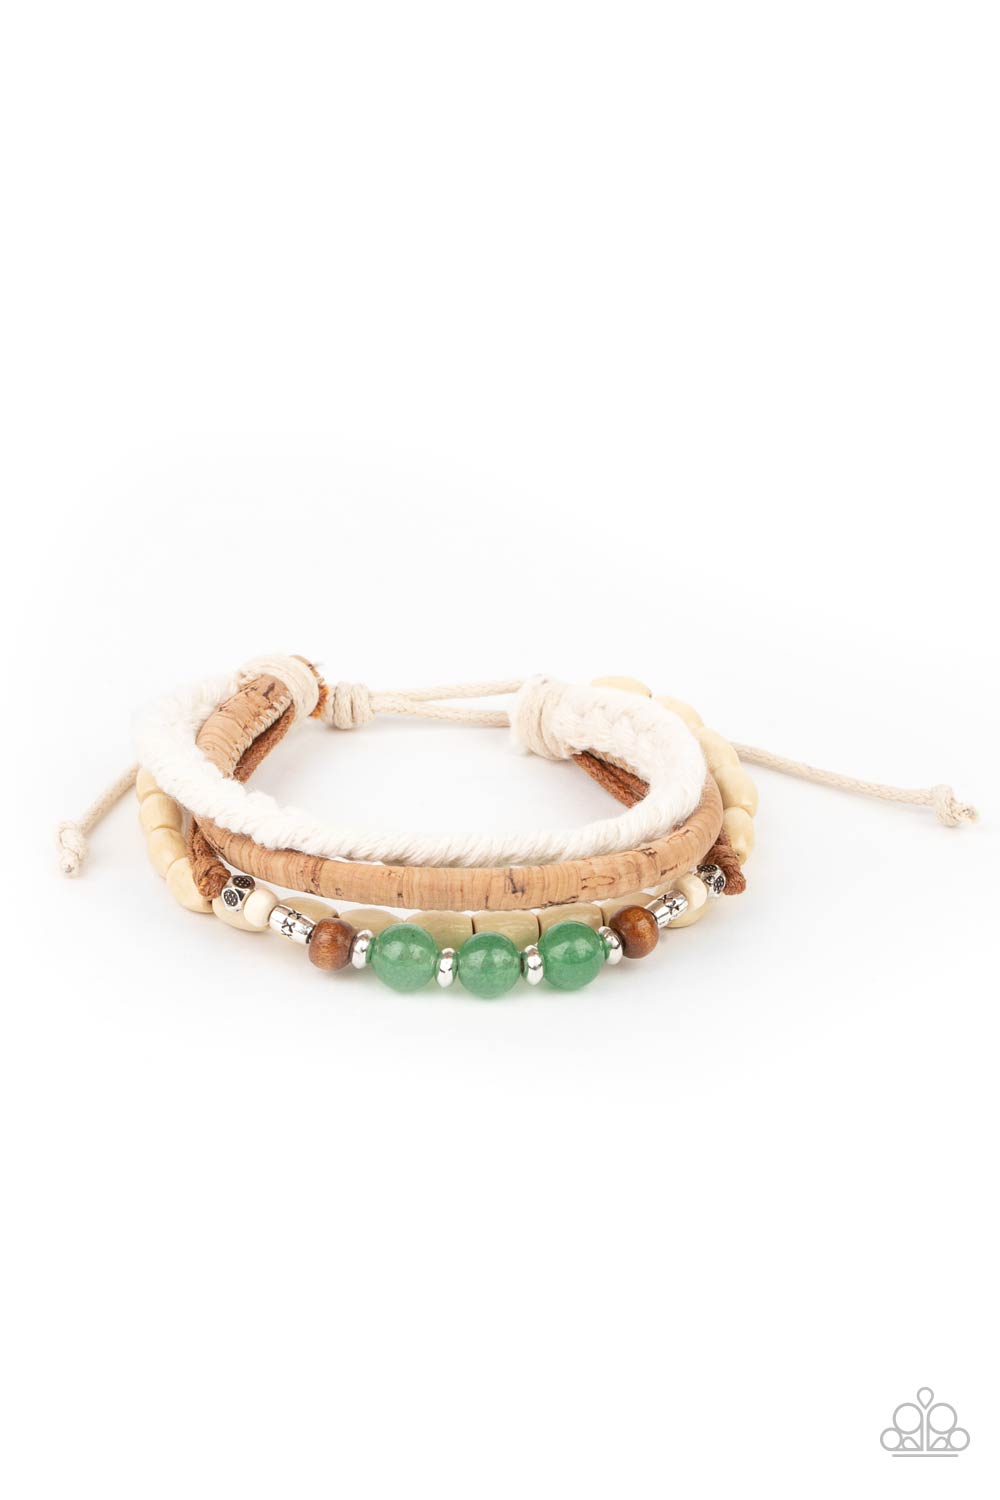 Natural-Born Navigator Jade Green Stone, Cork, Thread and Wood Urban Knot Bracelet - Paparazzi Accessories- lightbox - CarasShop.com - $5 Jewelry by Cara Jewels